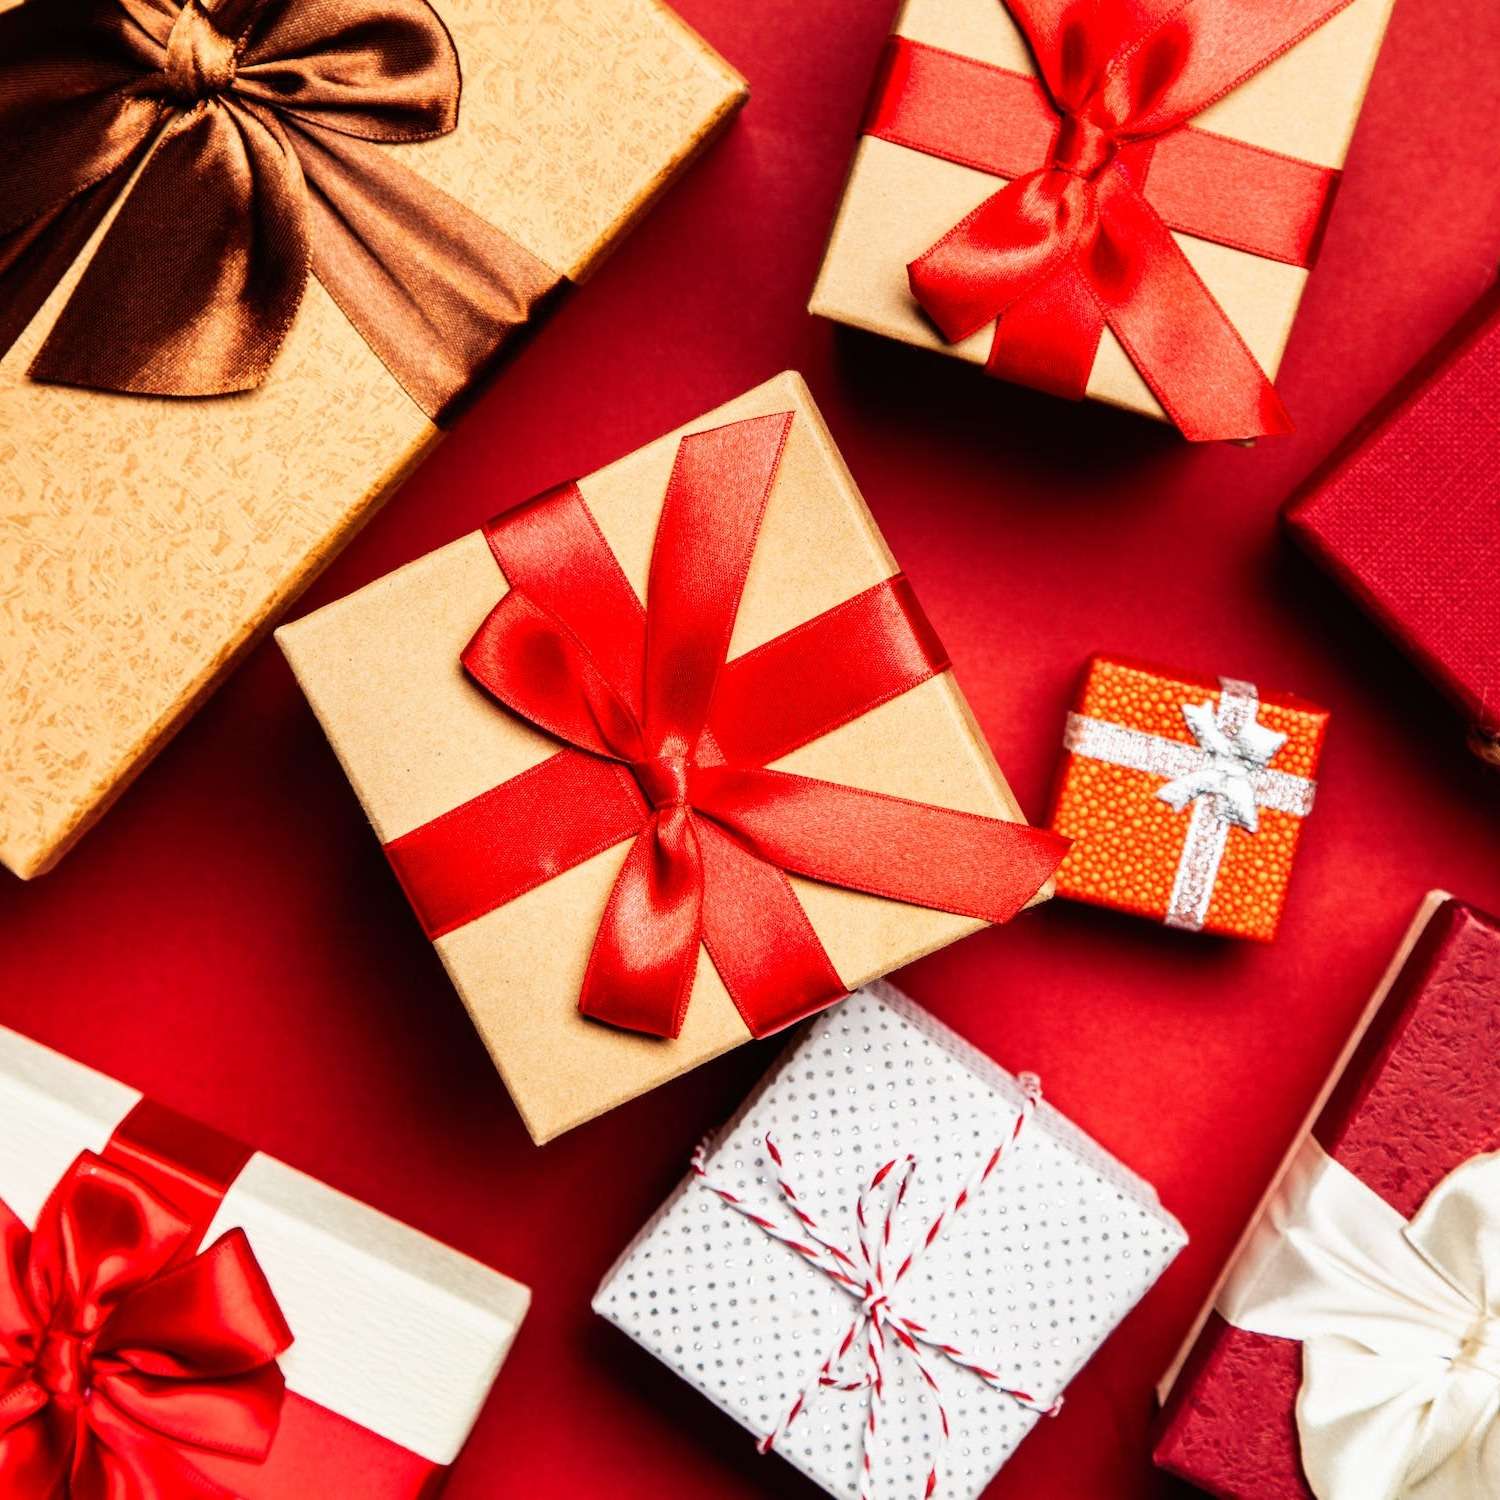 7 epic food gifts this Secret Santa season!